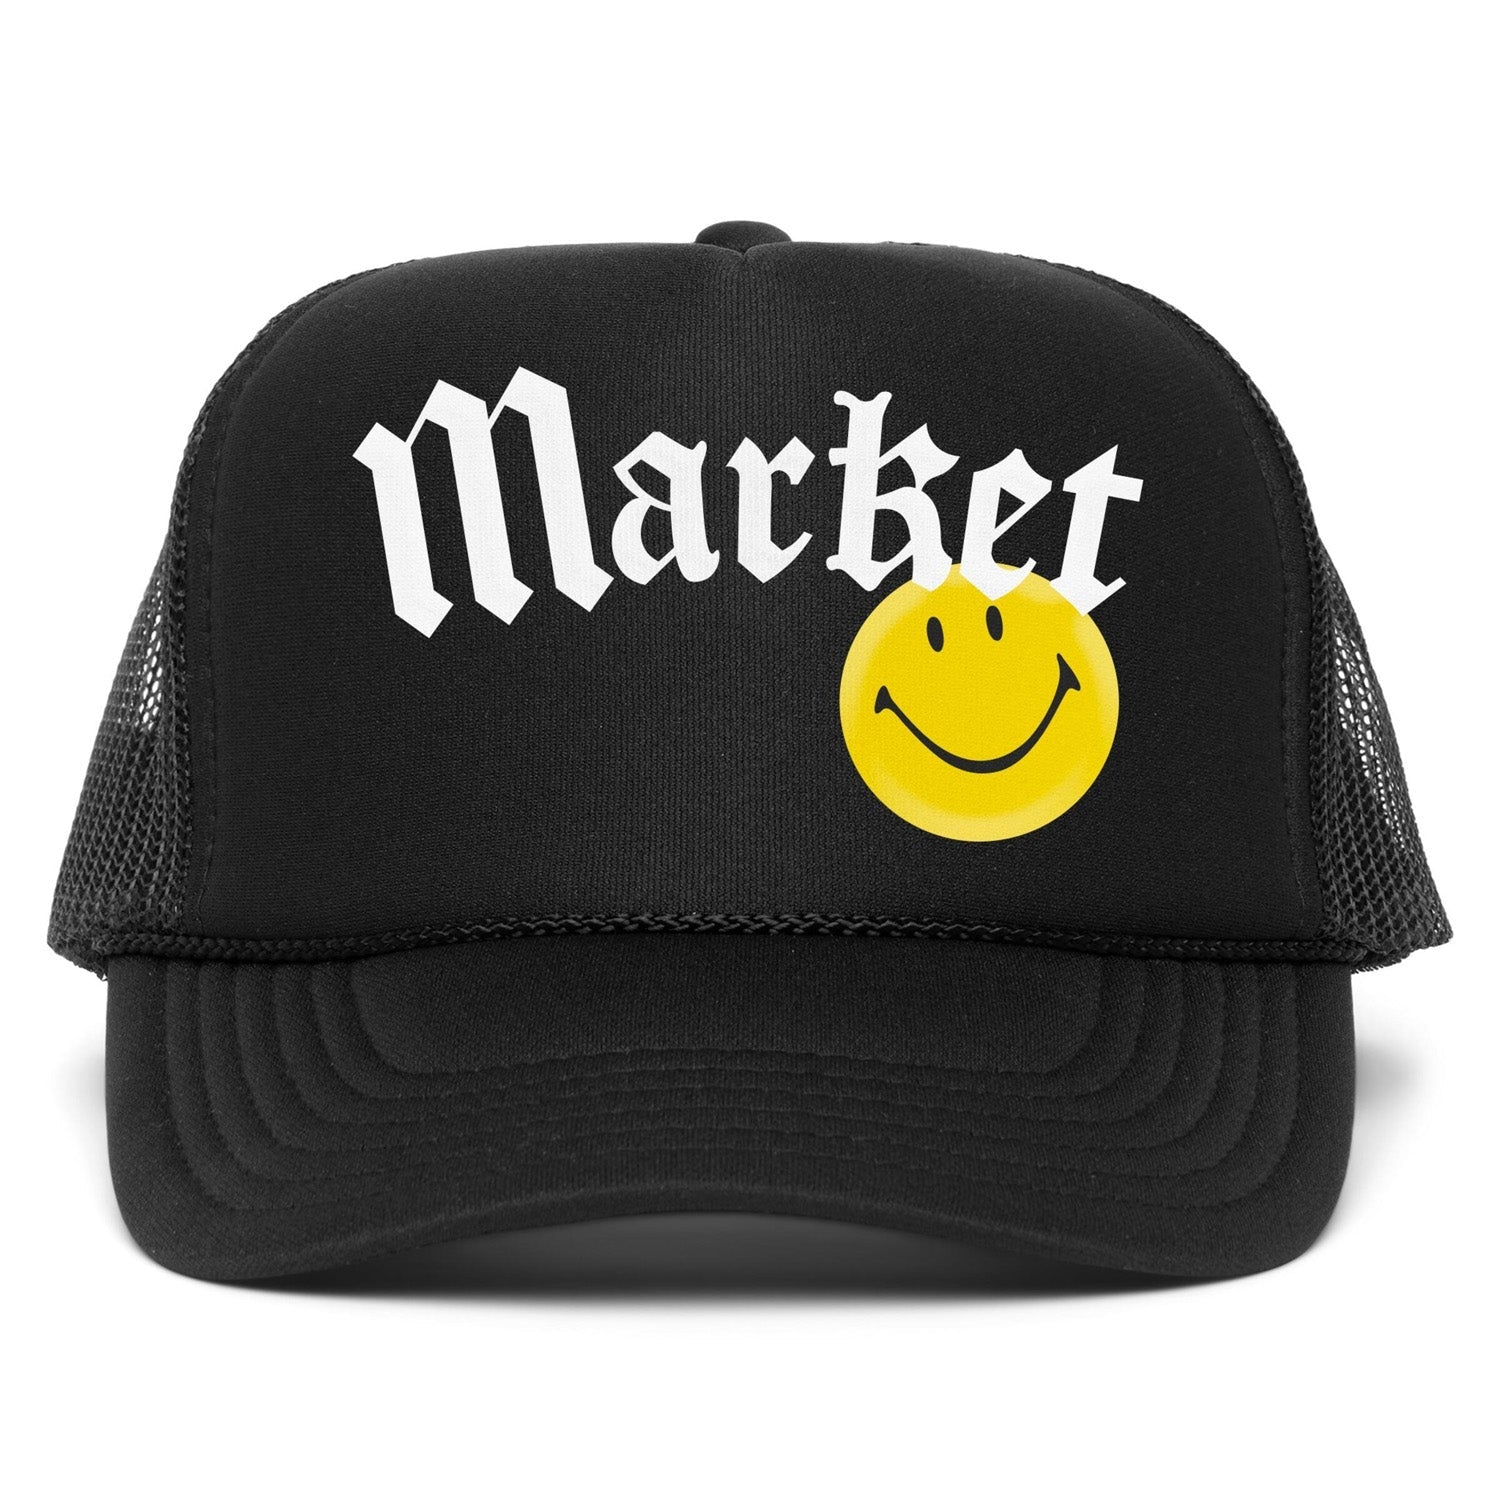 Market Smiley Gothic Trucker Hat Washed - HEADWEAR - Canada